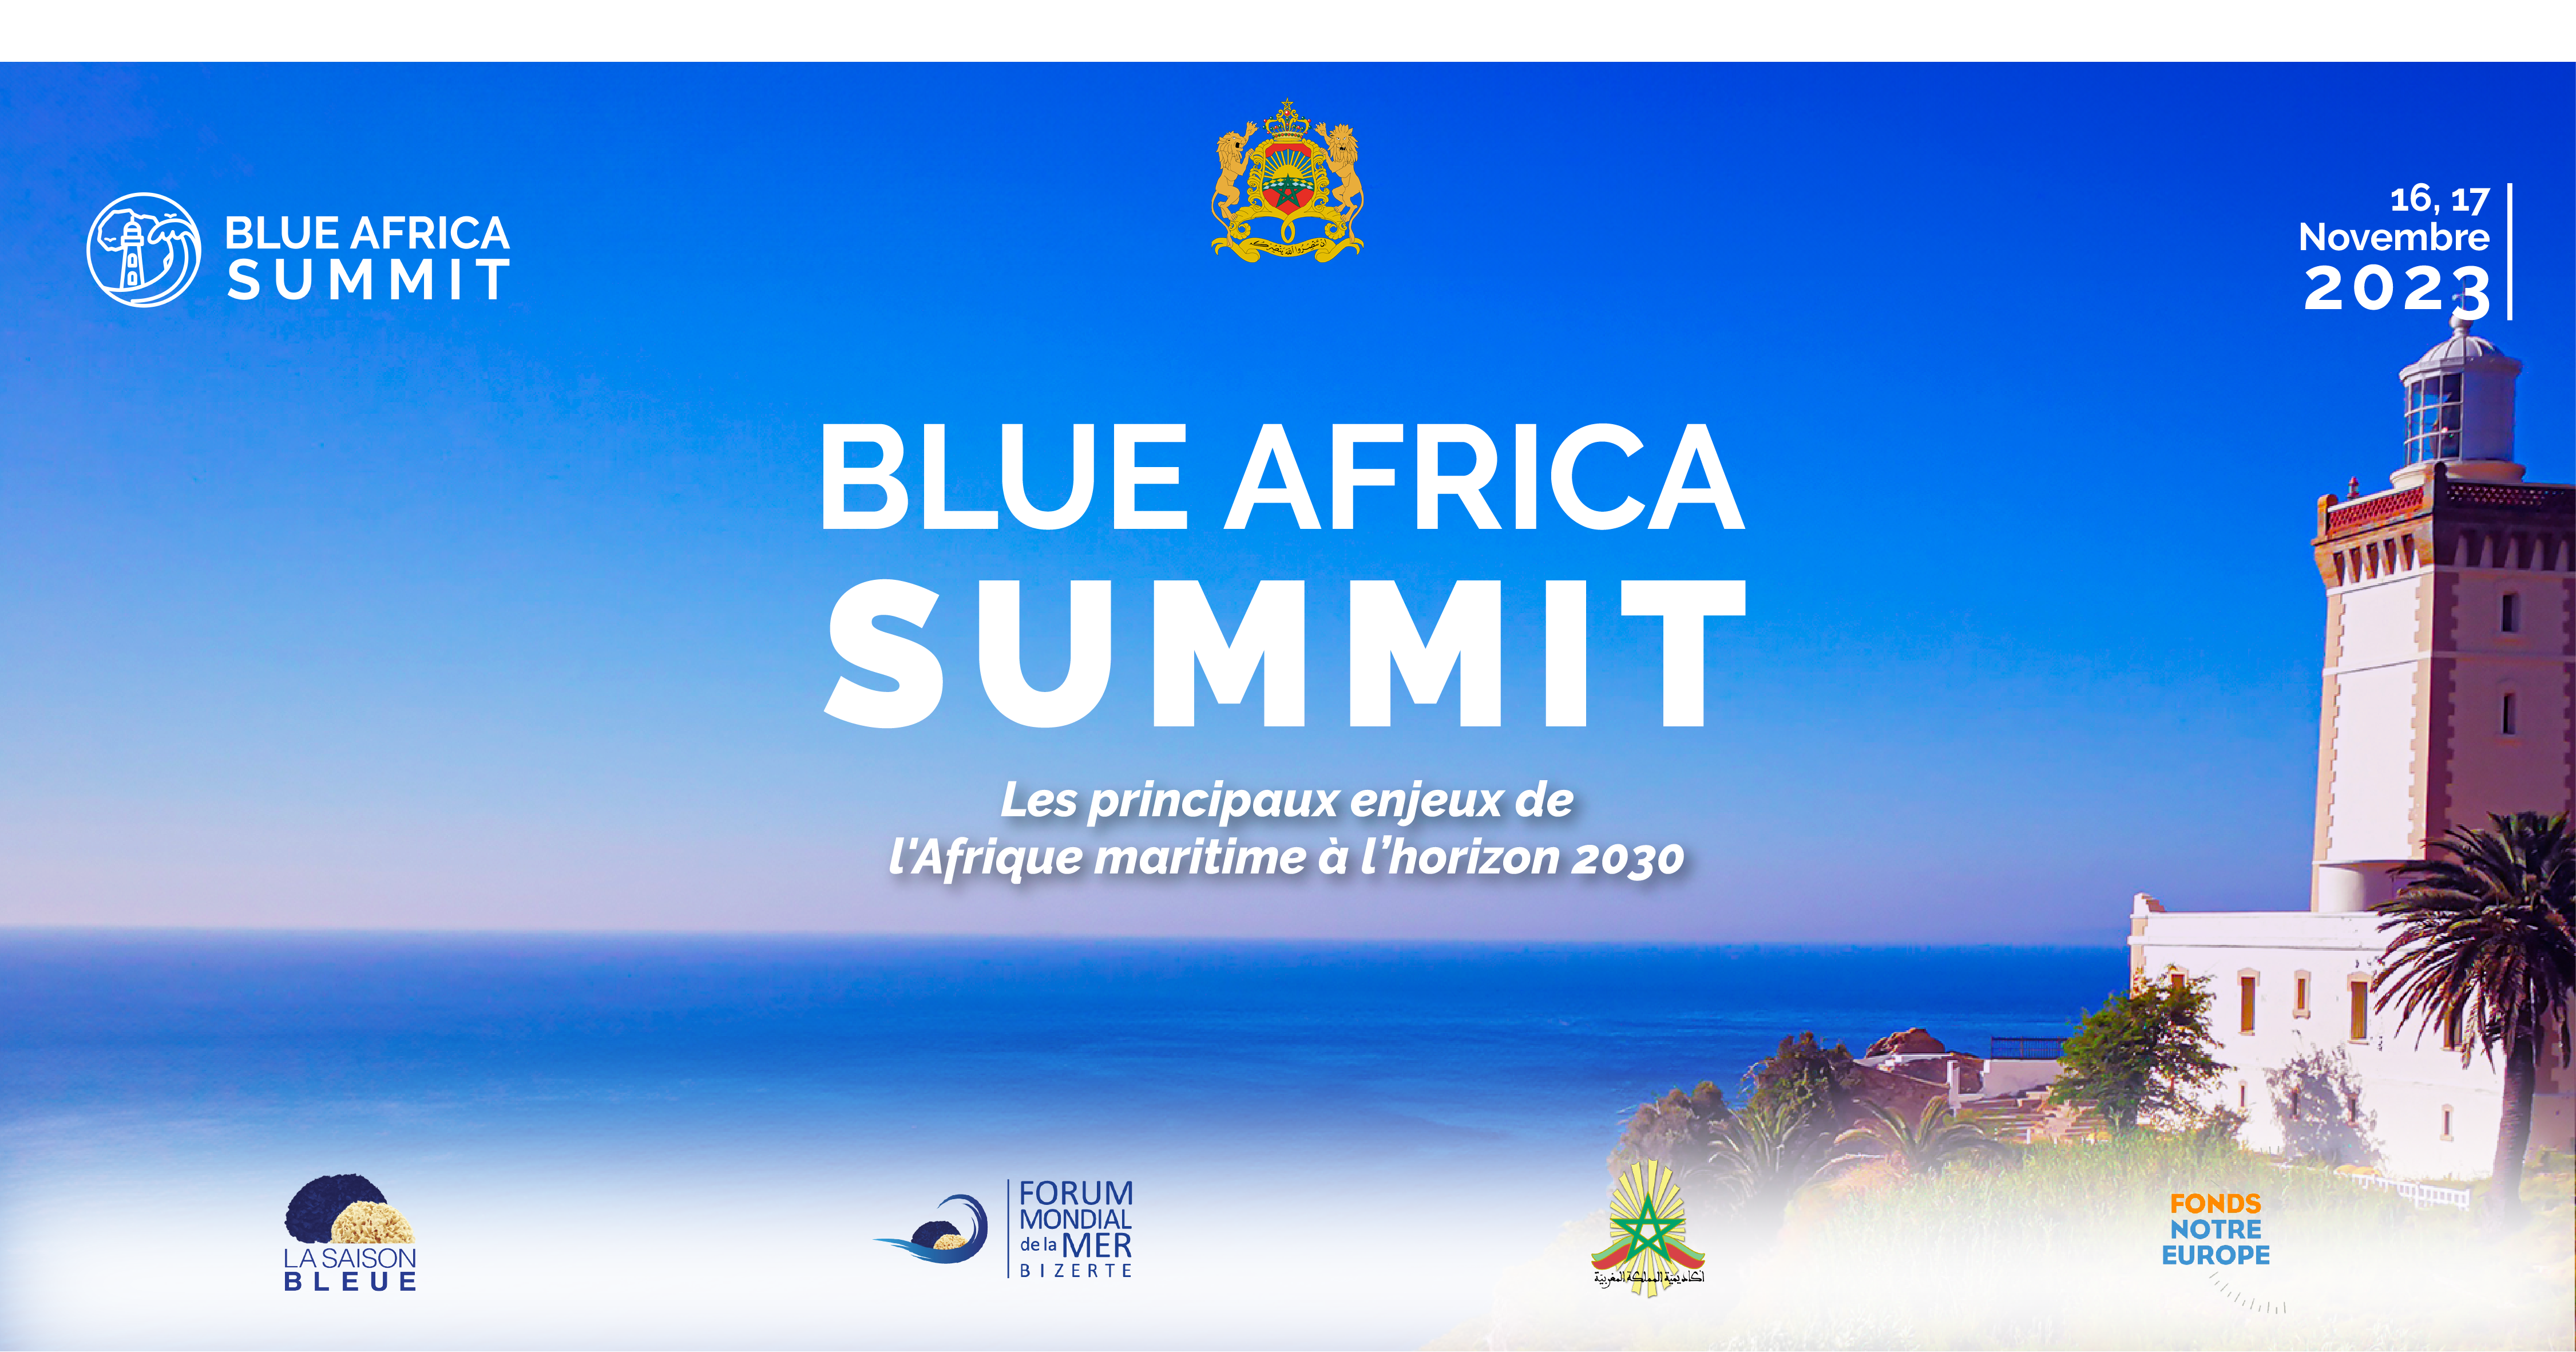 Blue Africa Summit  - الدورة الأولى لمؤتمر قمة إفريقيا الزرقاء